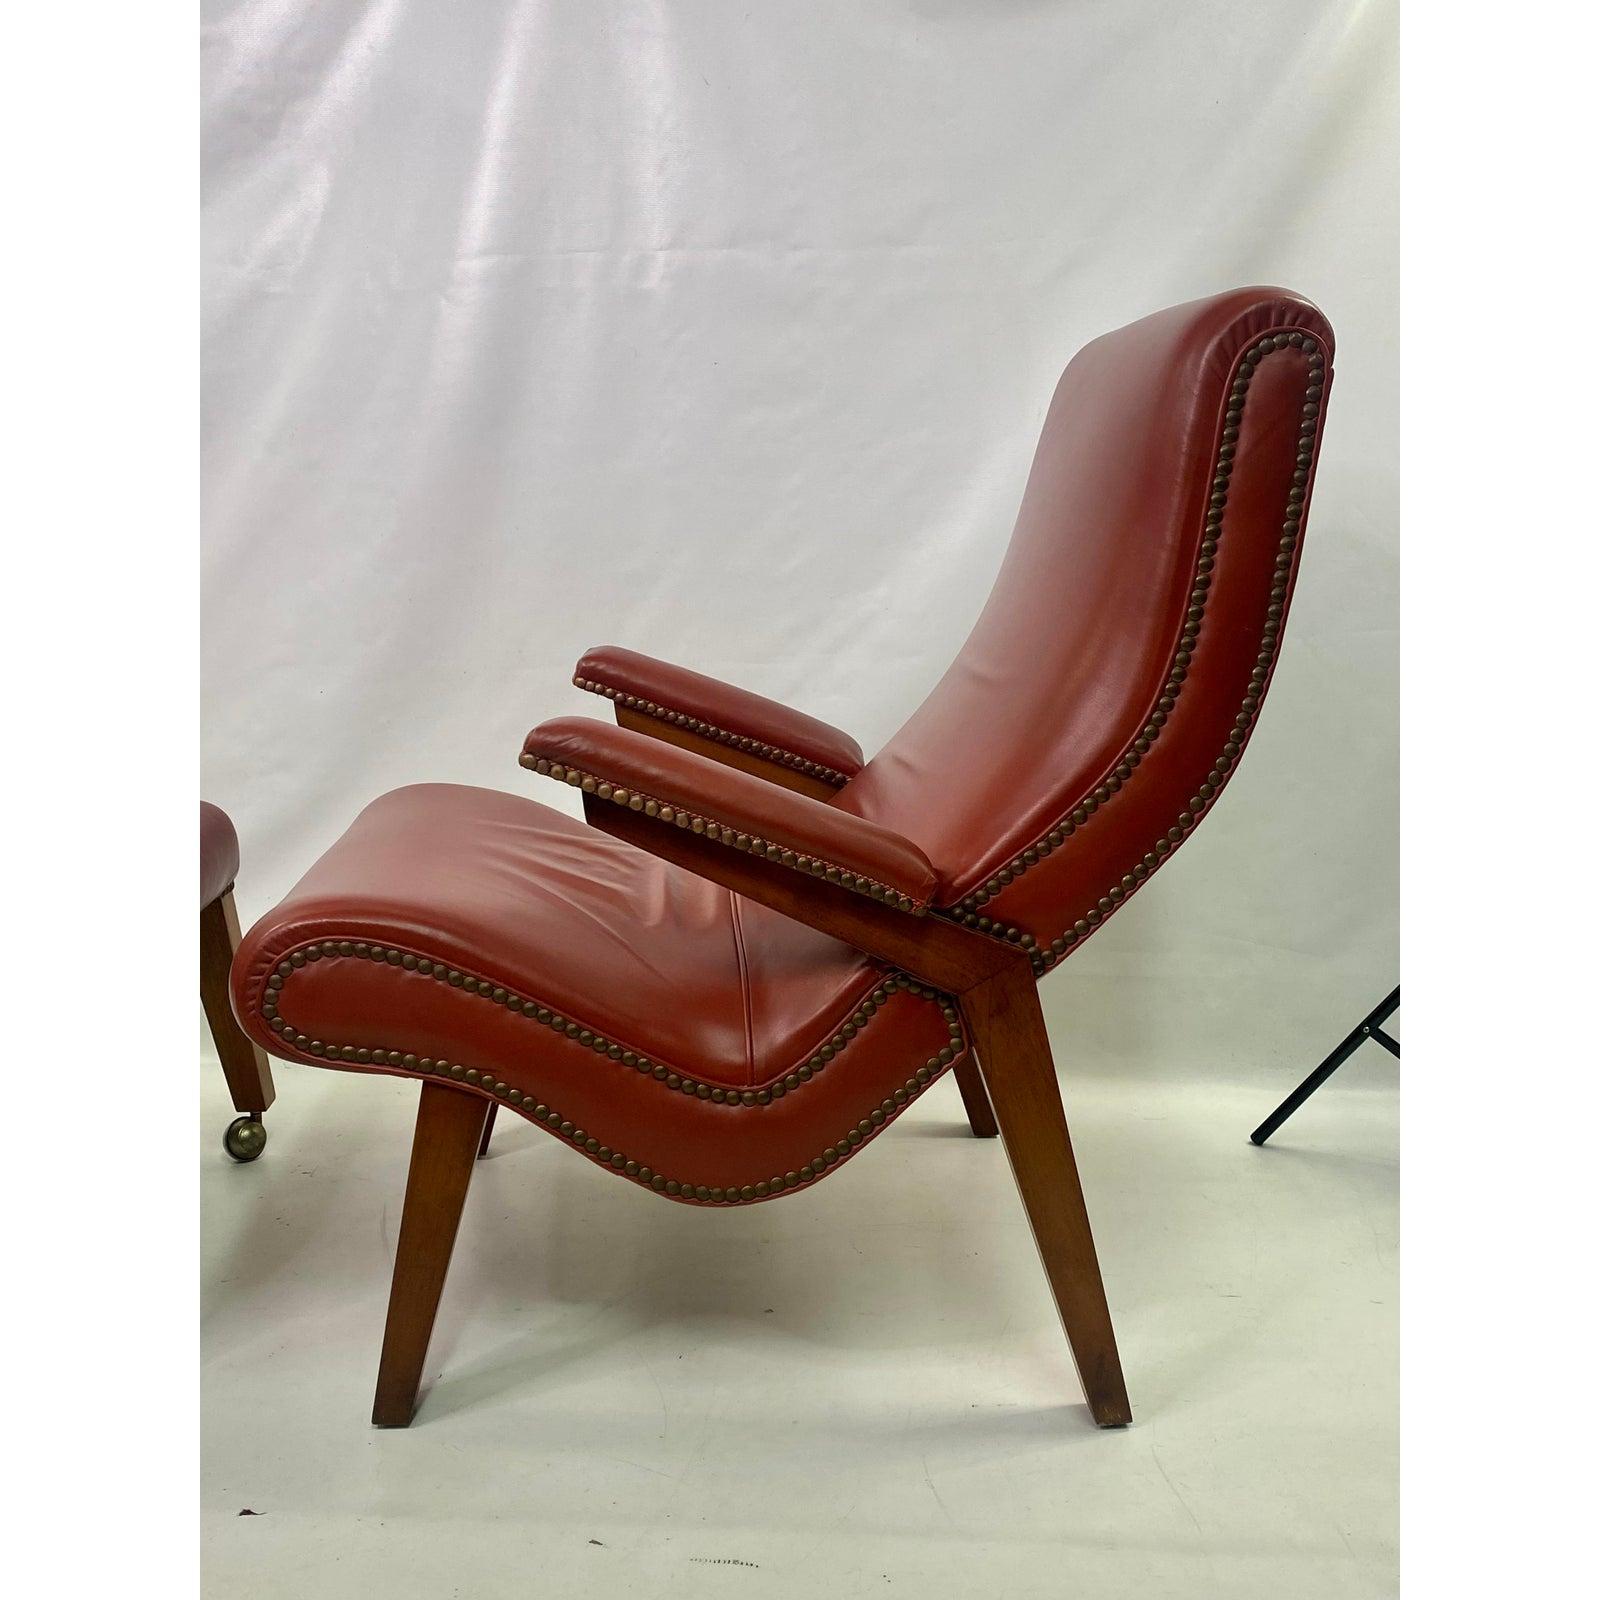 1950s Scandinavian Modern lounge chair with ottoman

Ottoman measures:
24” W. 20” D 17” H.